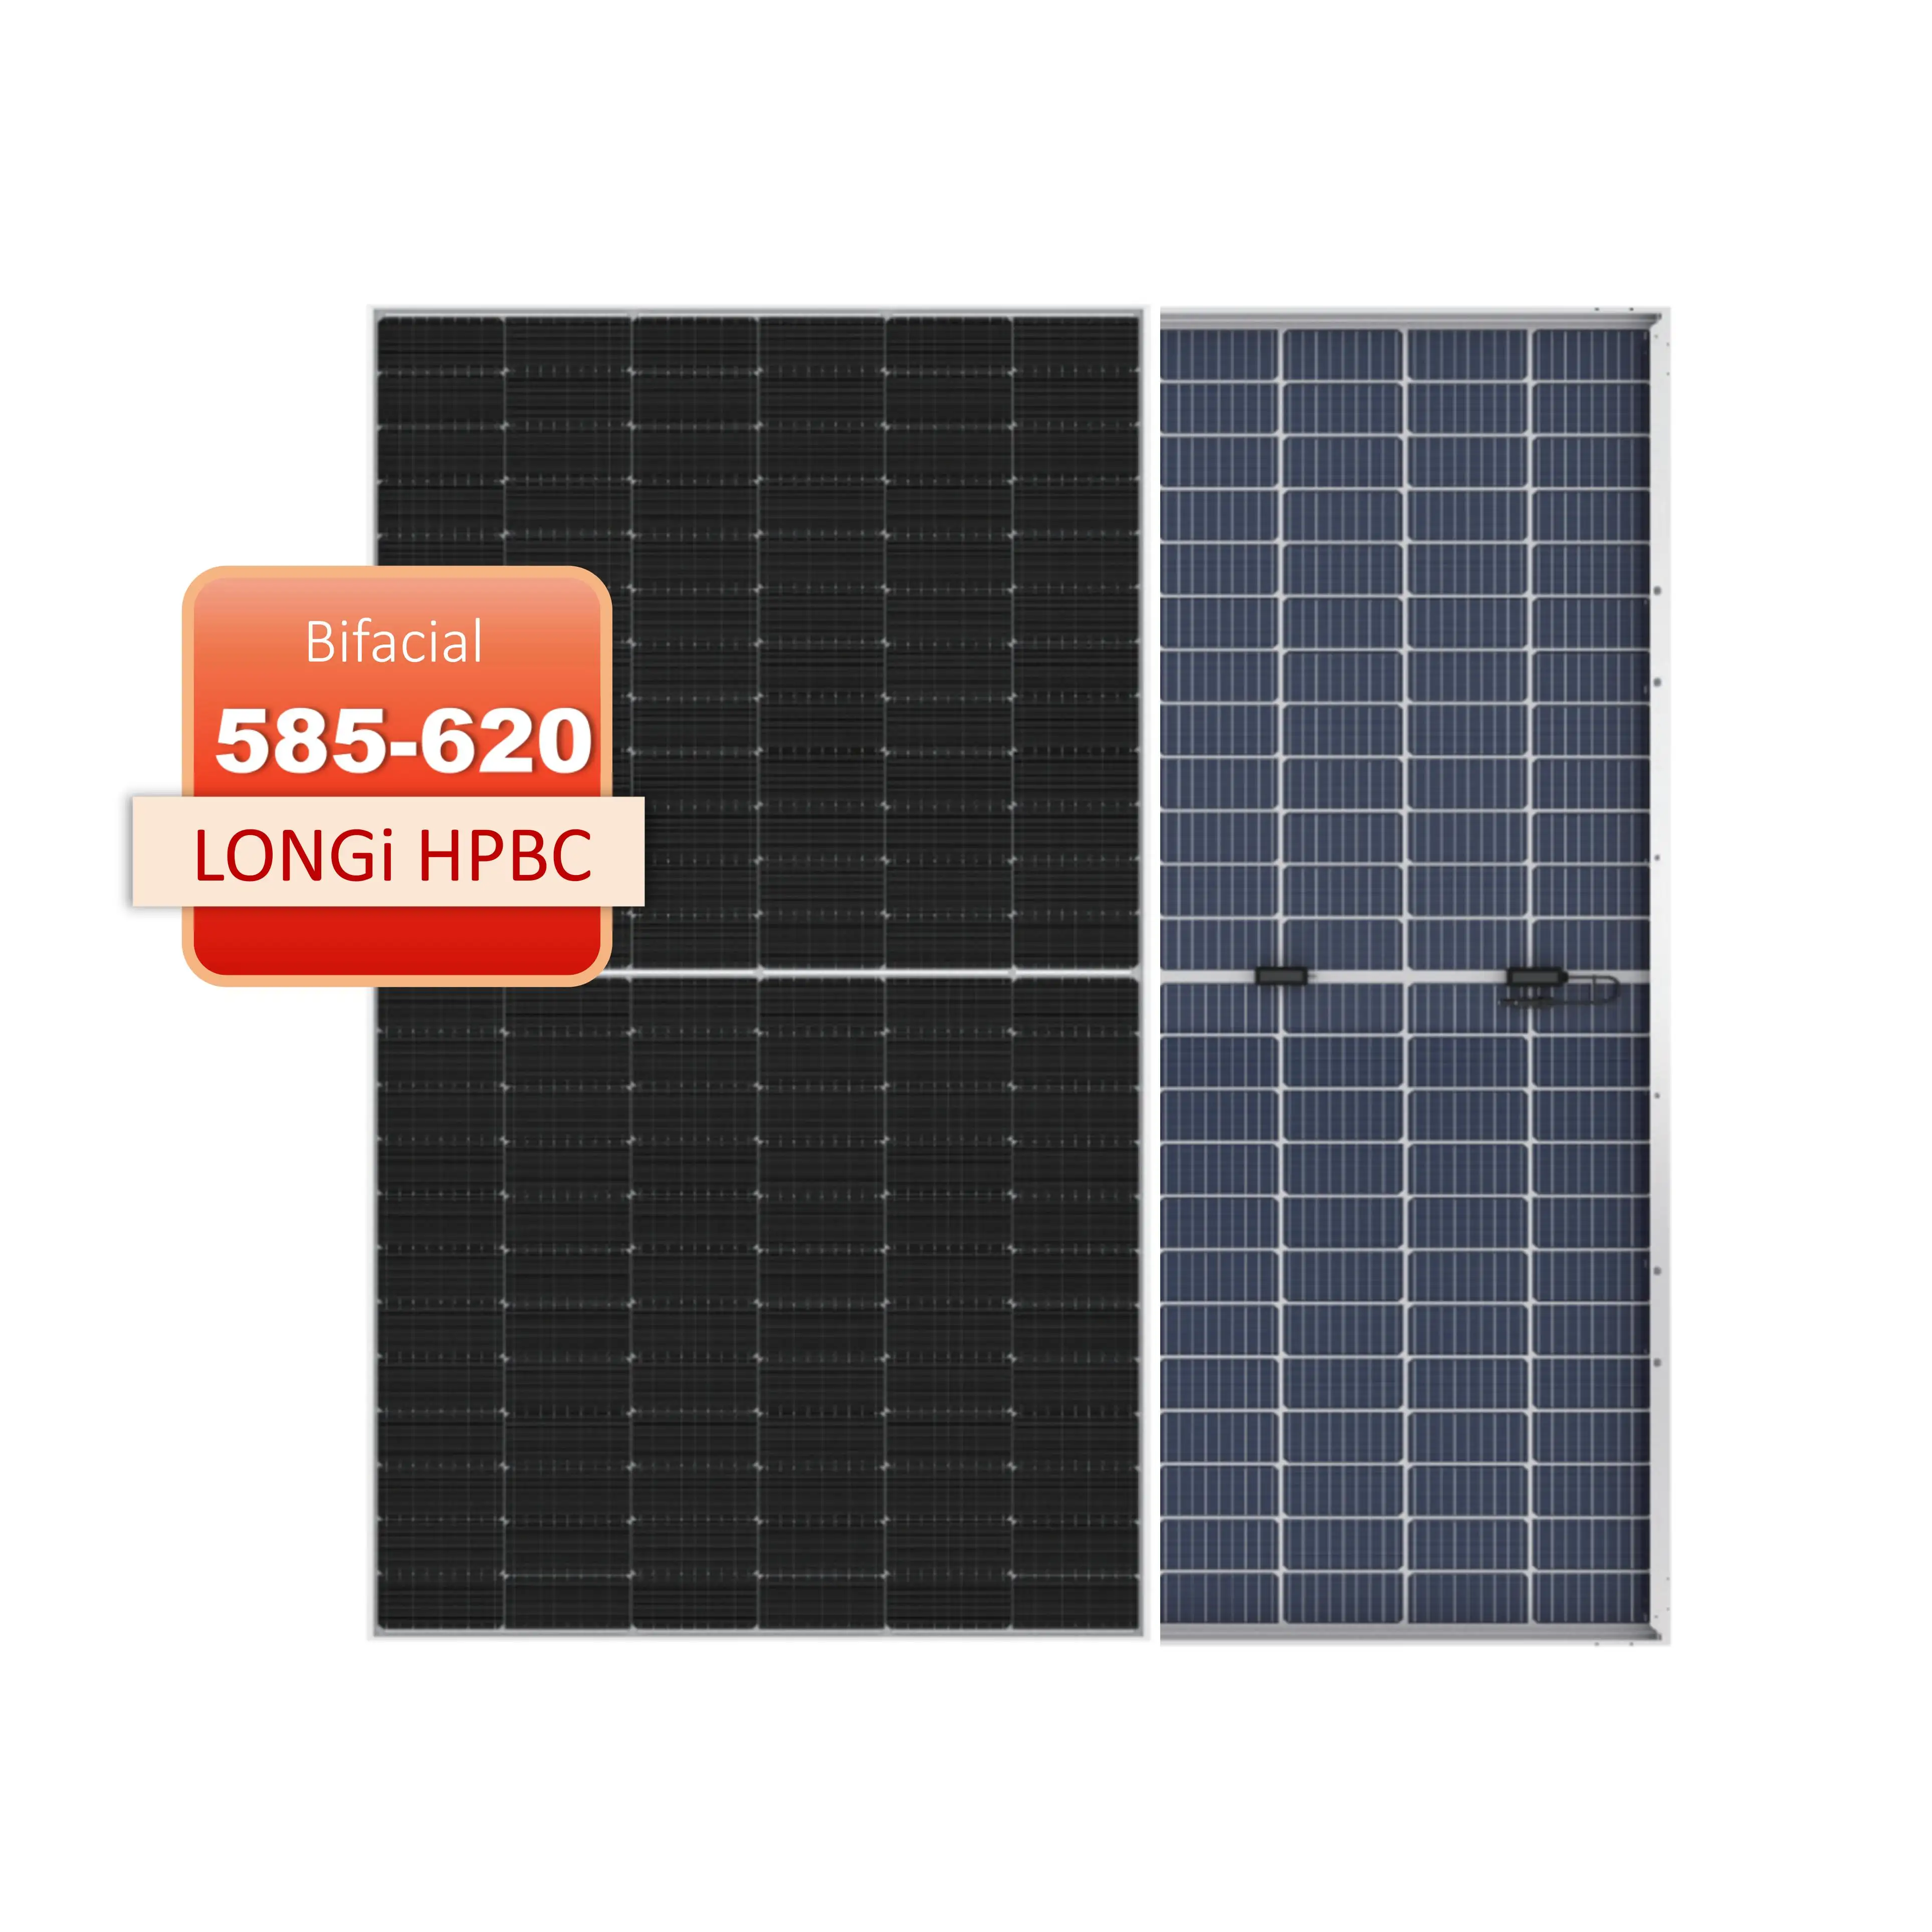 540-560W the best Longi hi-mo7 bifacial monocrystalline solar panel with HPBC Cell